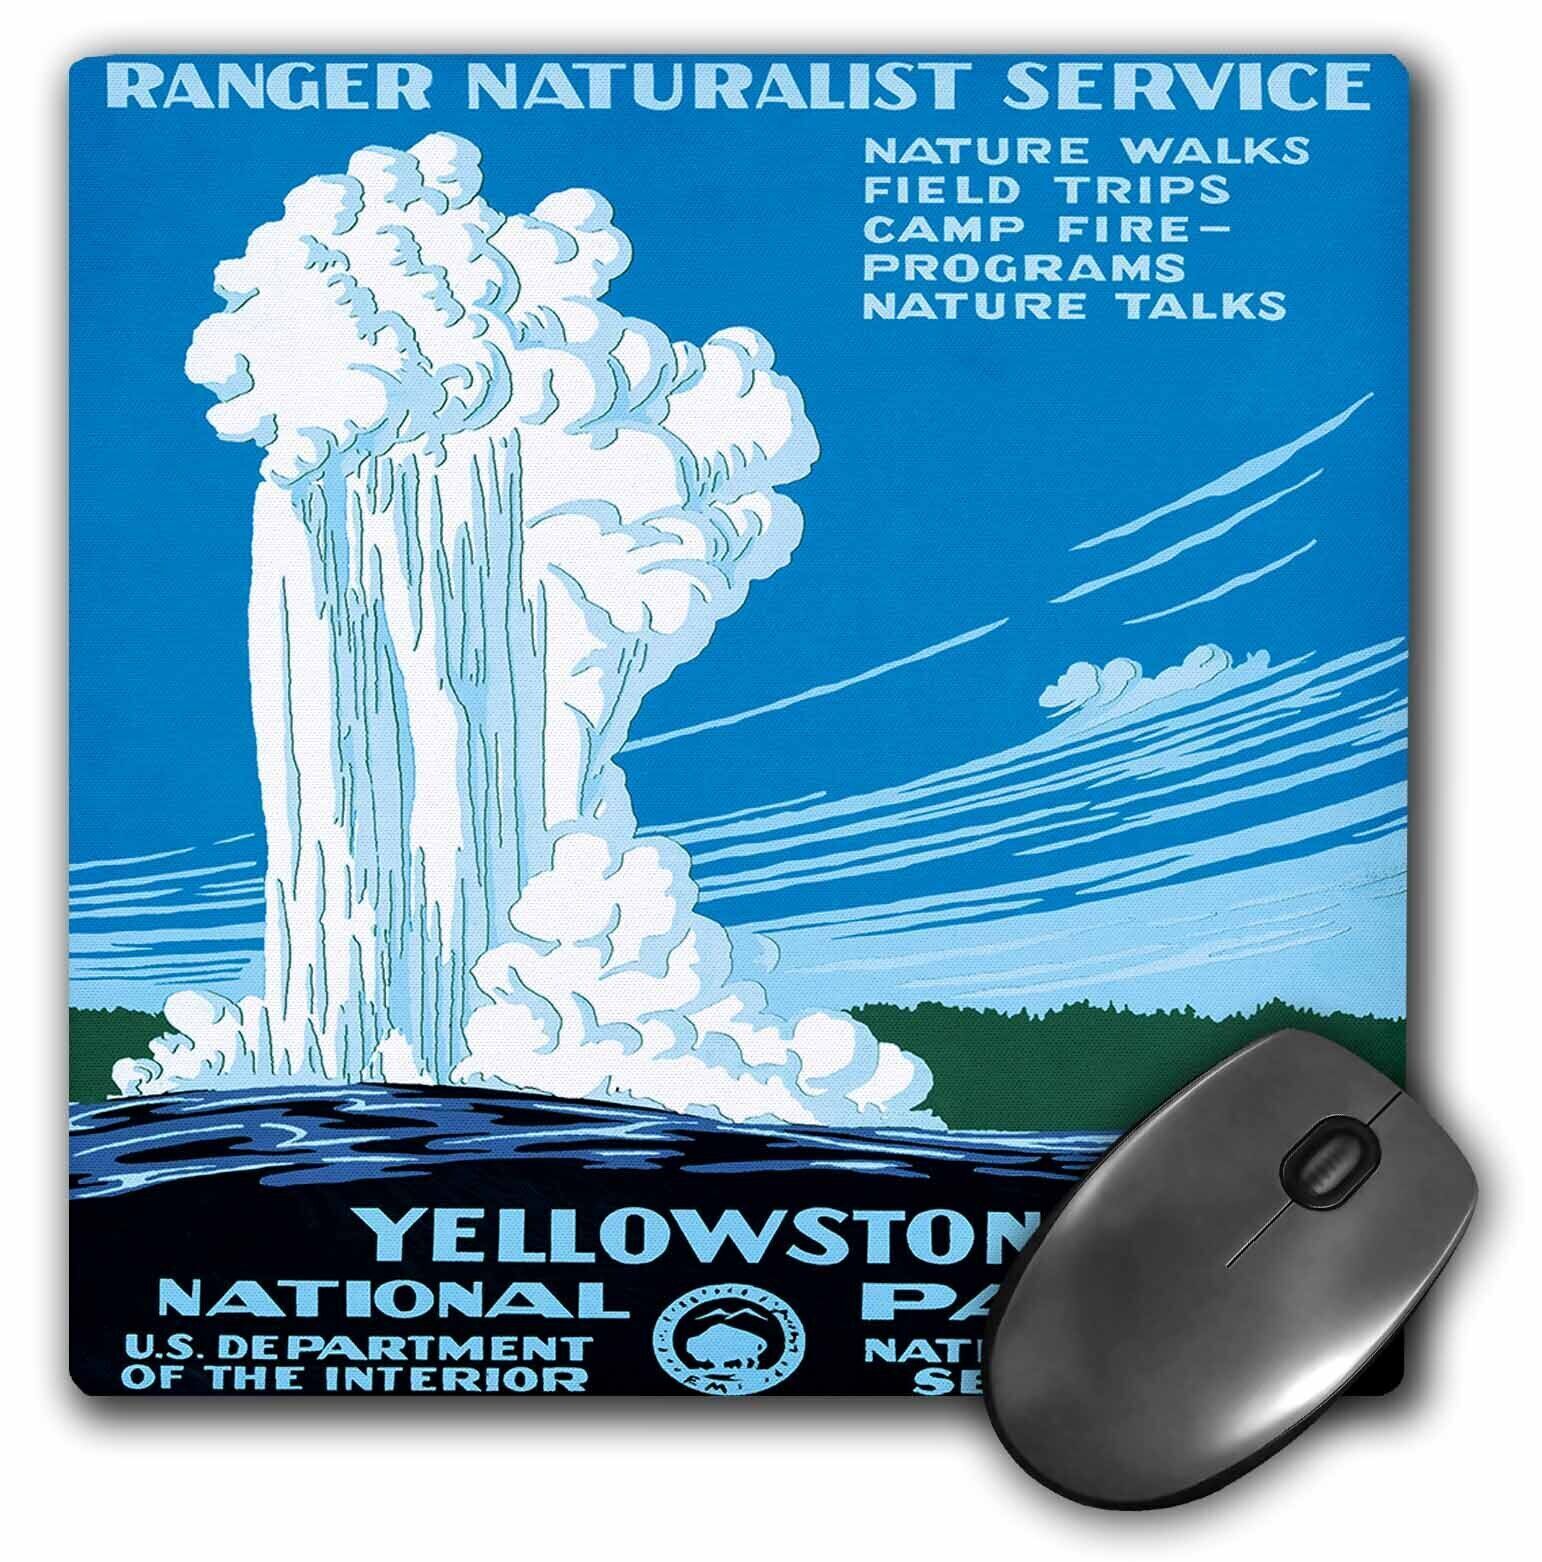 3dRose Ranger Naturalist Service Yellowstone l Park, US Dept of Interior MousePa